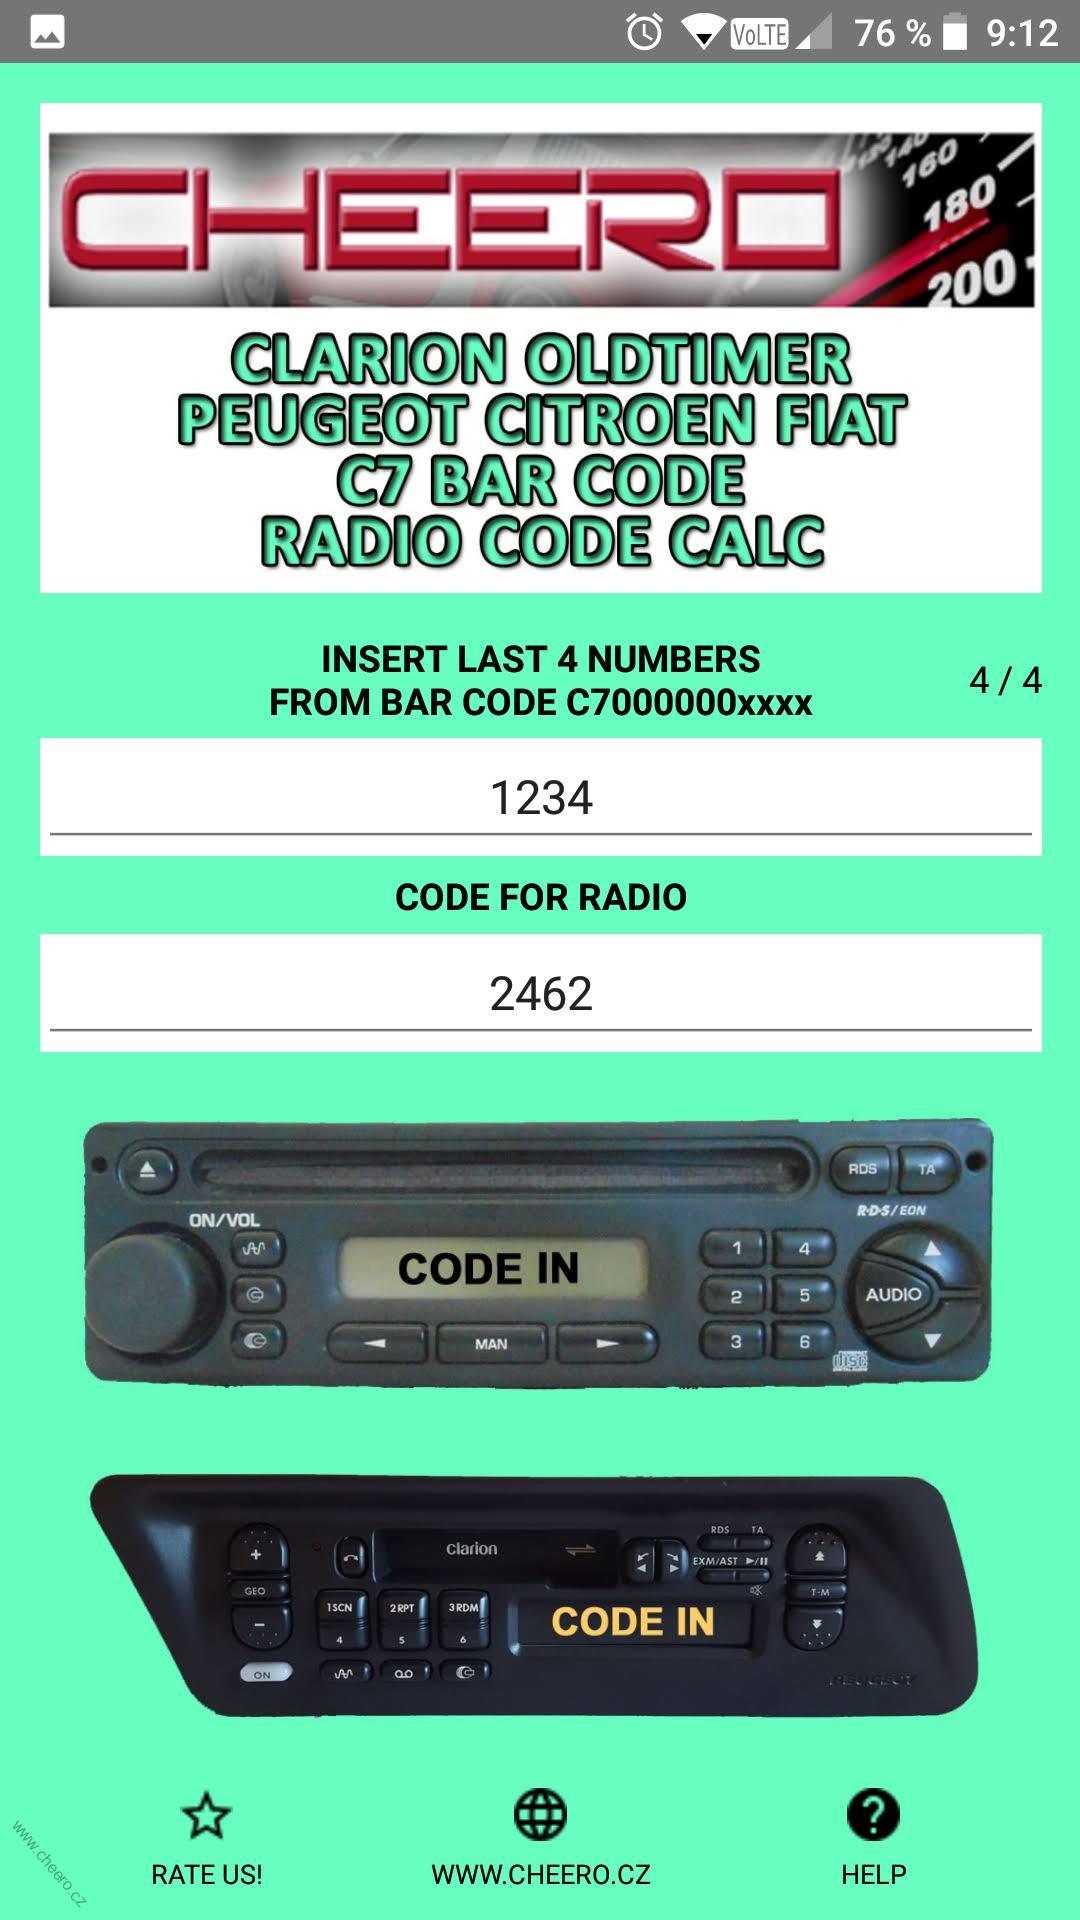 RADIO CODE FOR CLARION PU-2294 BAR CODE C7